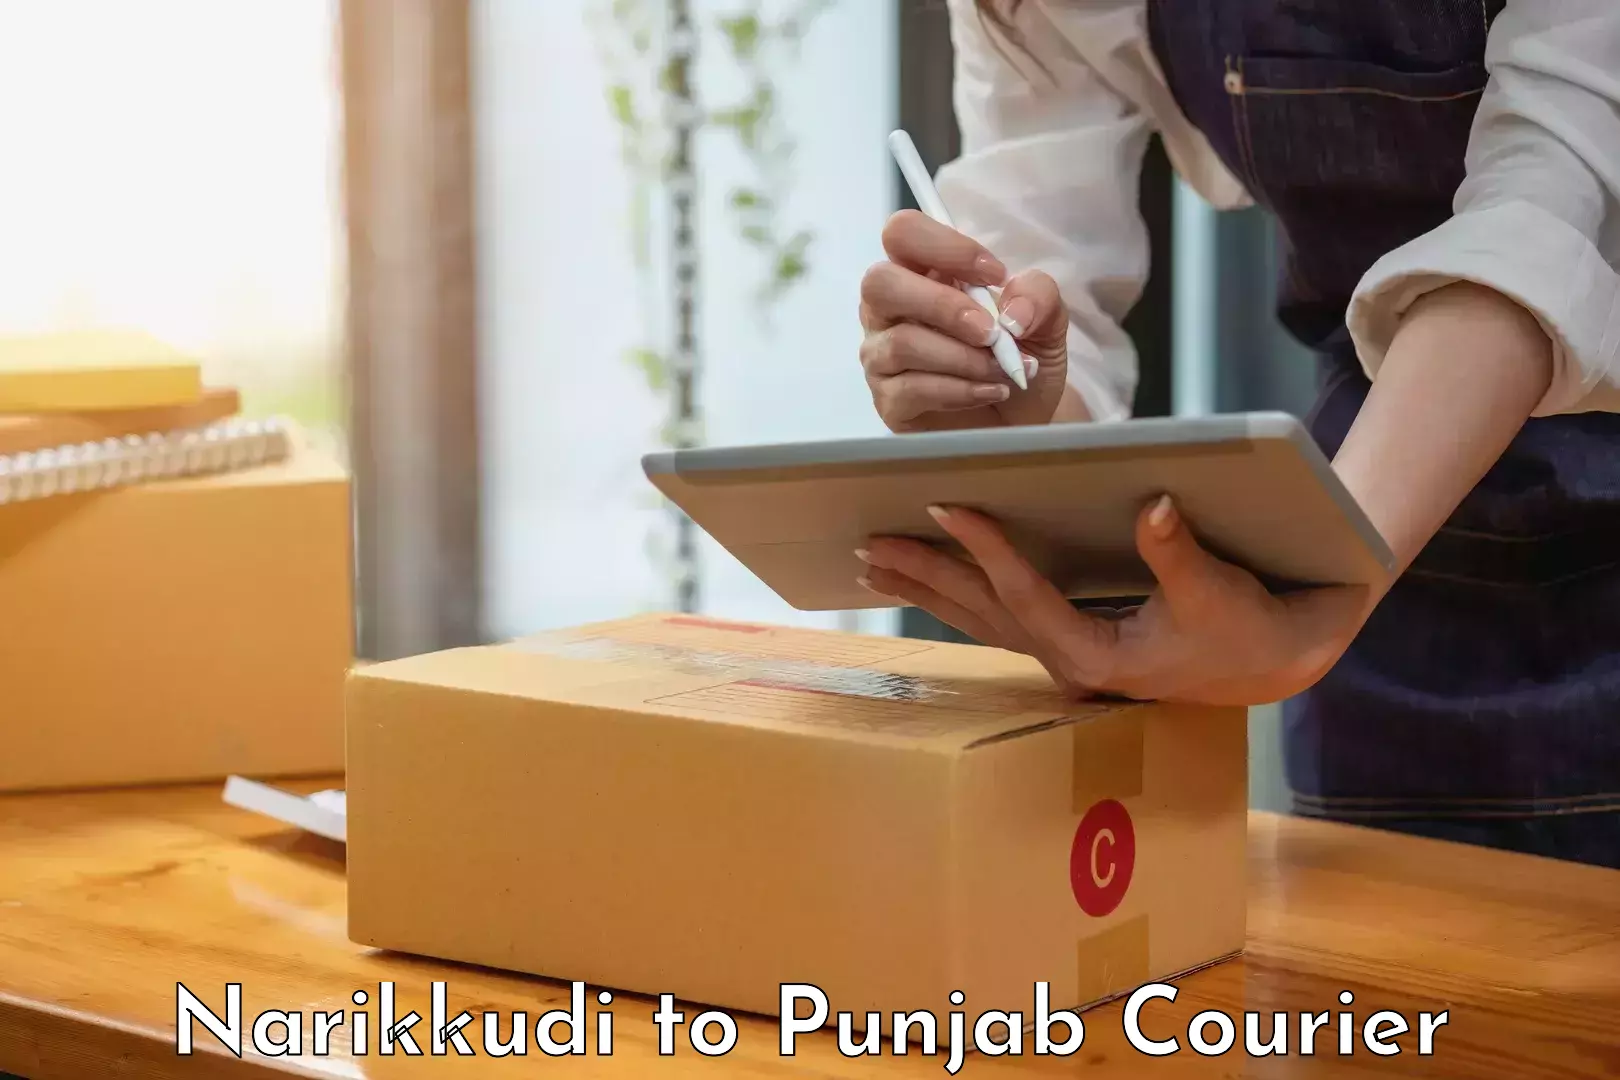 Professional courier services Narikkudi to Punjab